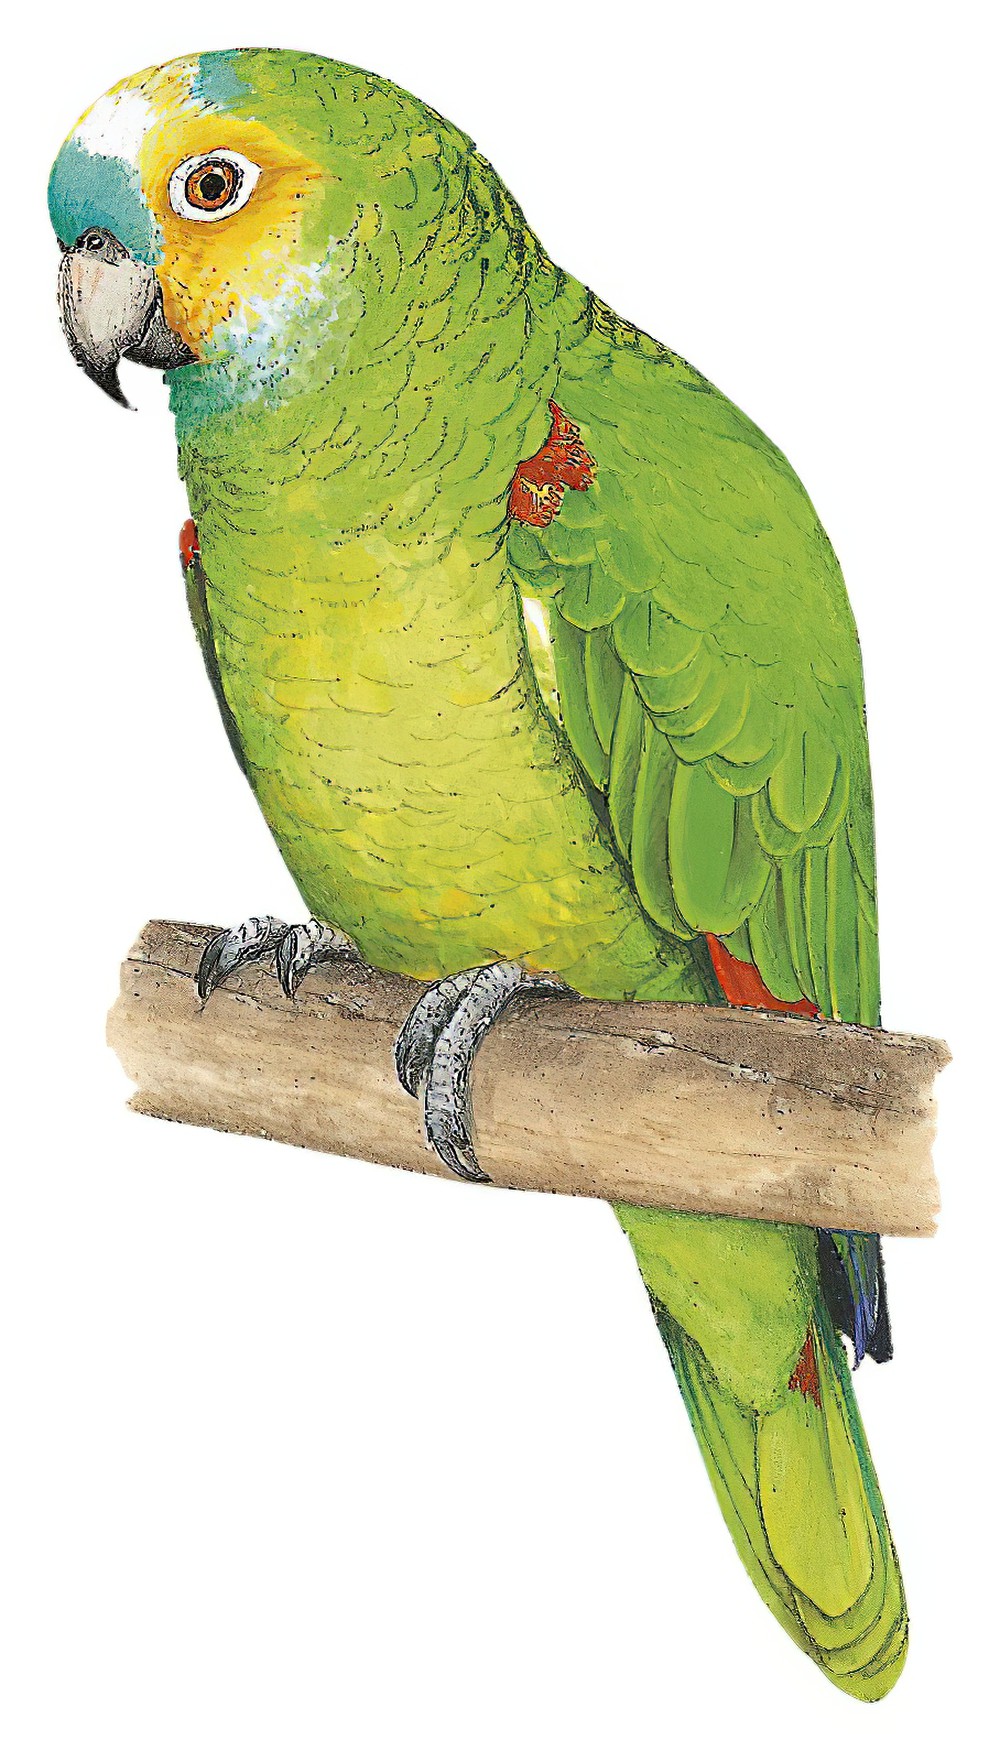 Turquoise-fronted Parrot / Amazona aestiva